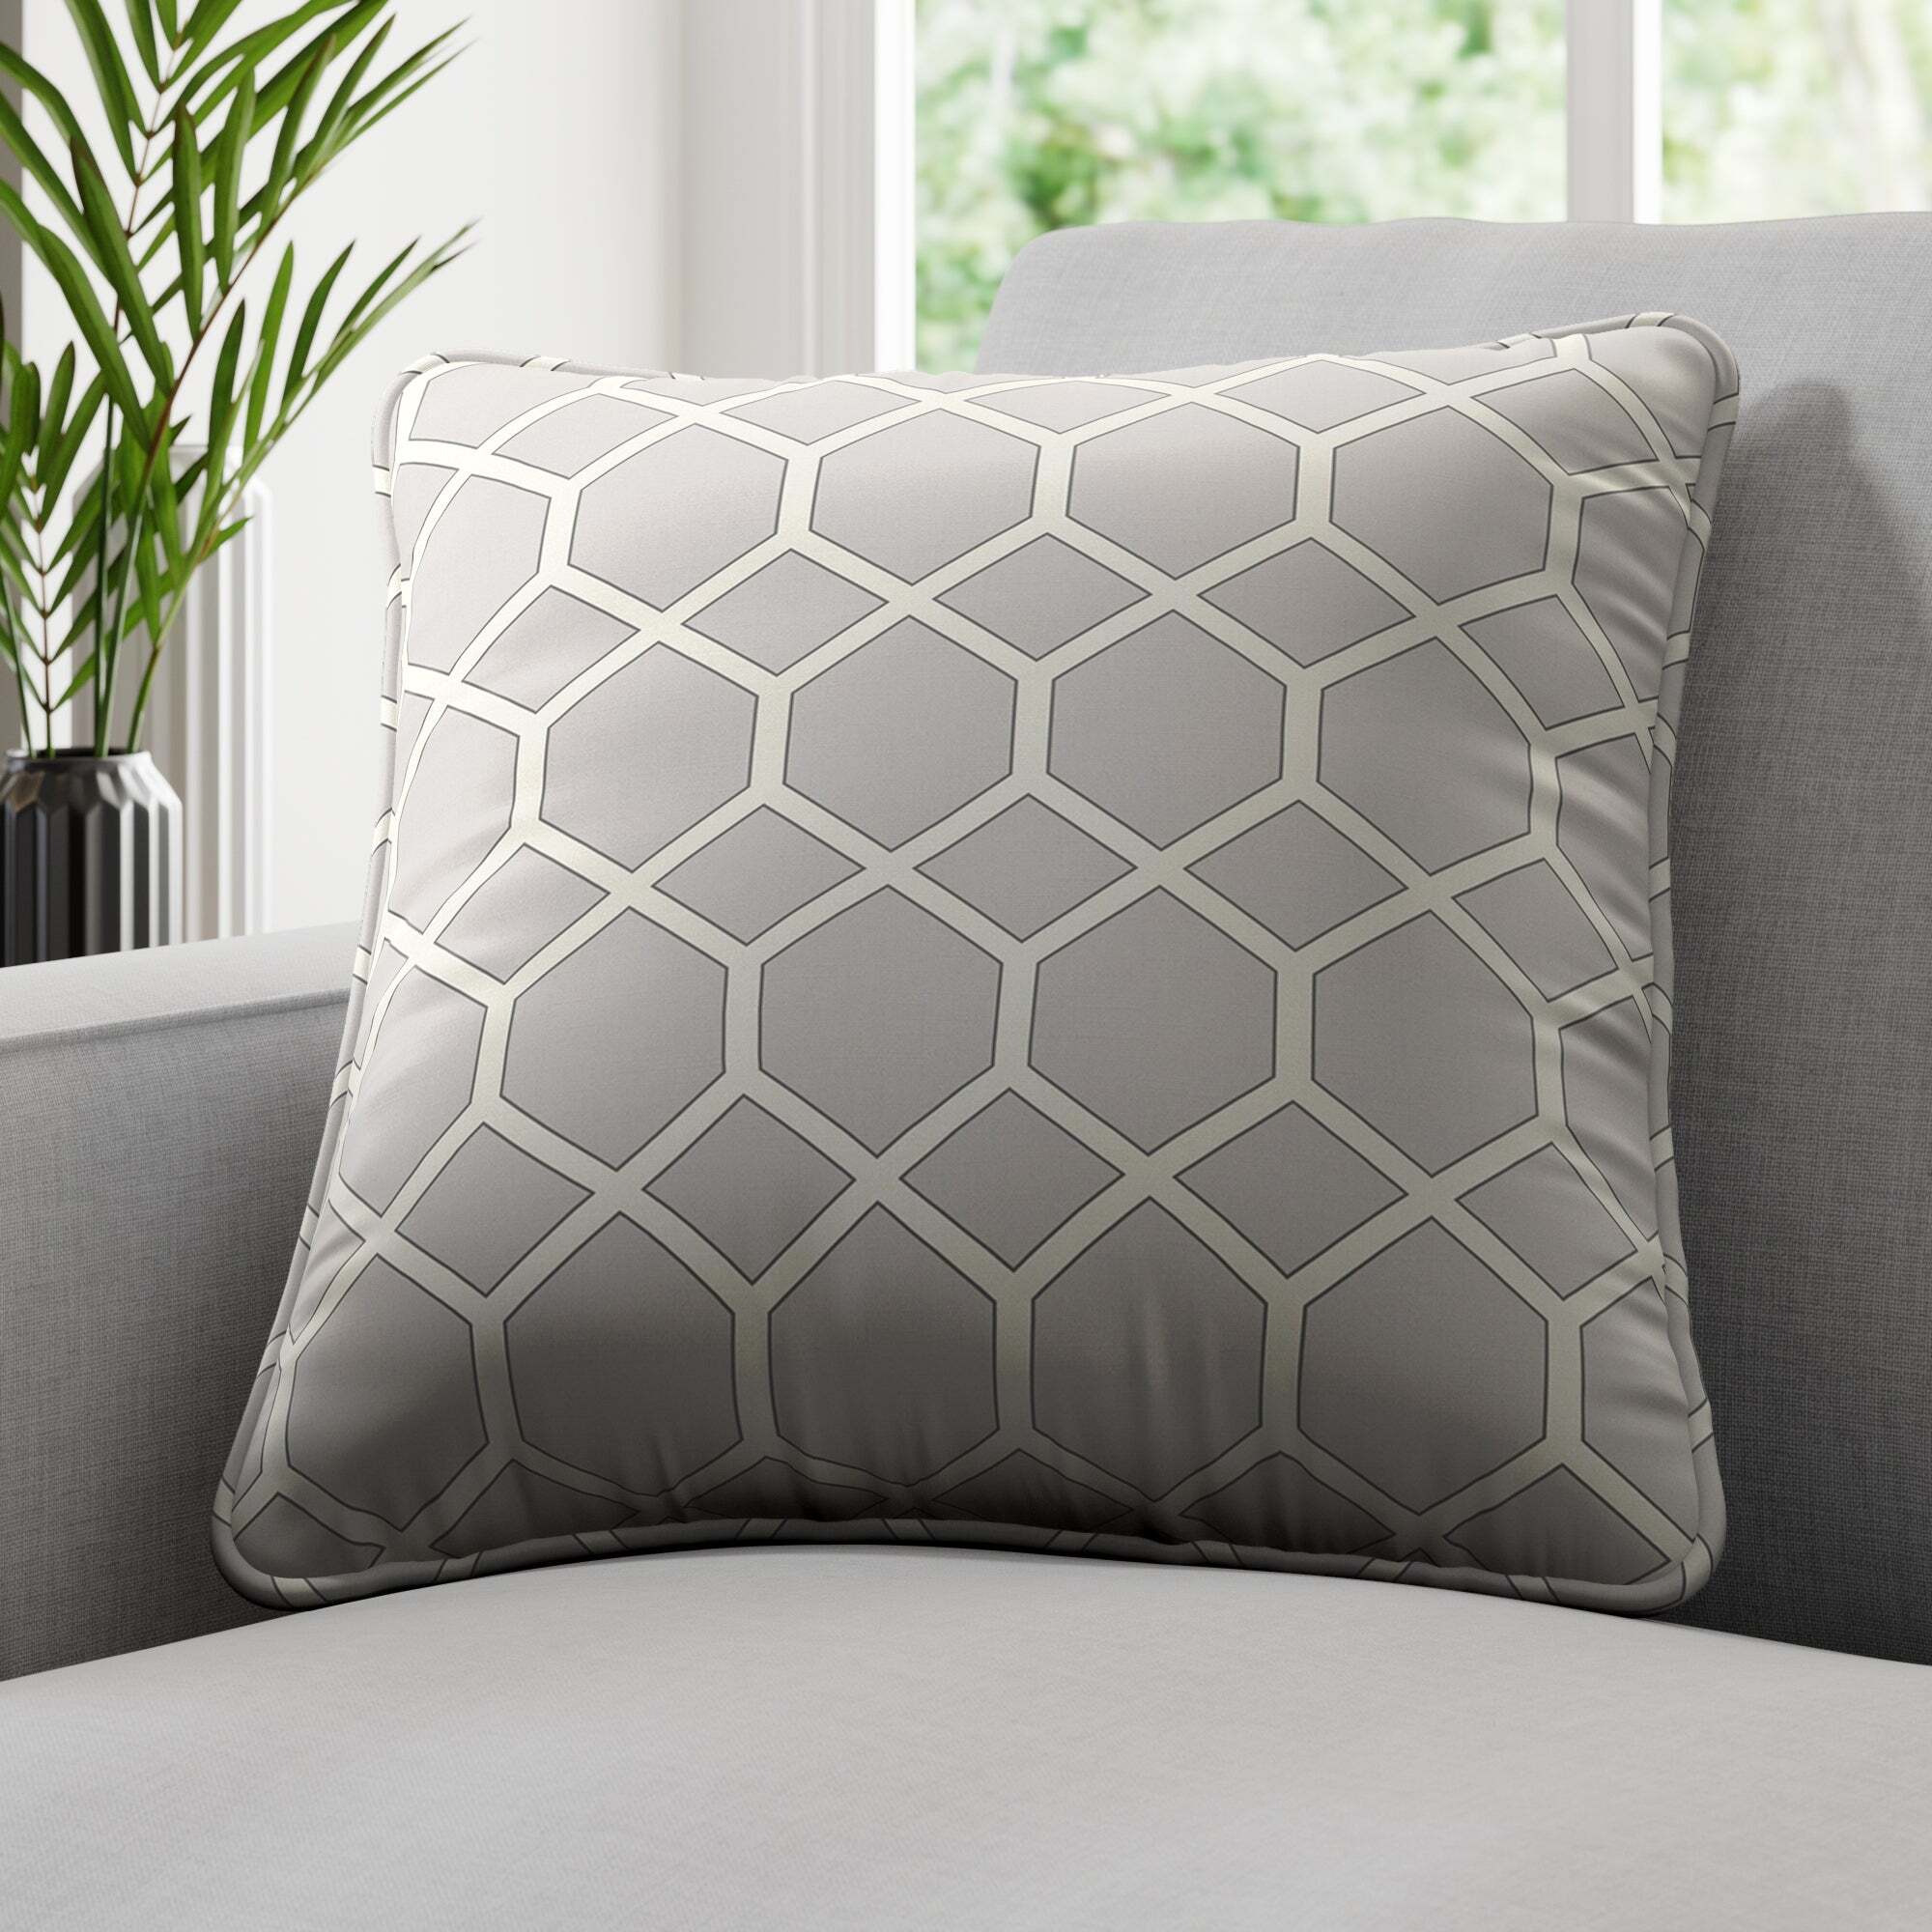 Symmetry Made to Order Fire Retardant Cushion Cover Grey/White